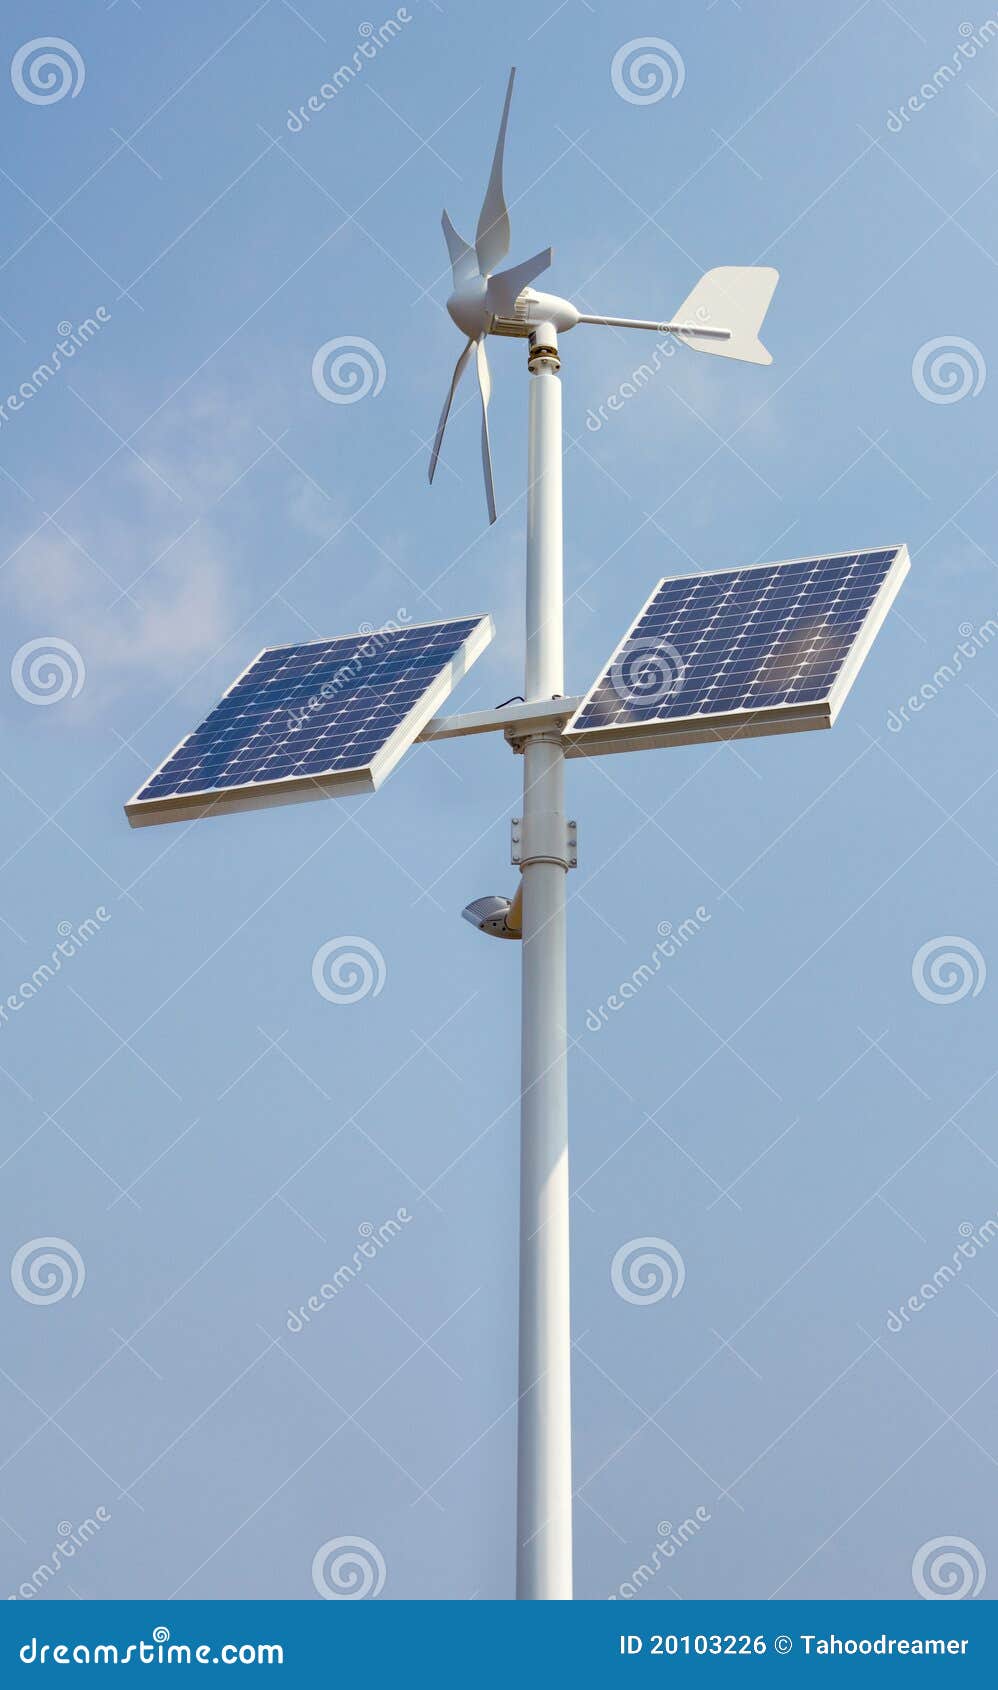 Mini Wind Power And Solar Panels Royalty Free Stock Image - Image 